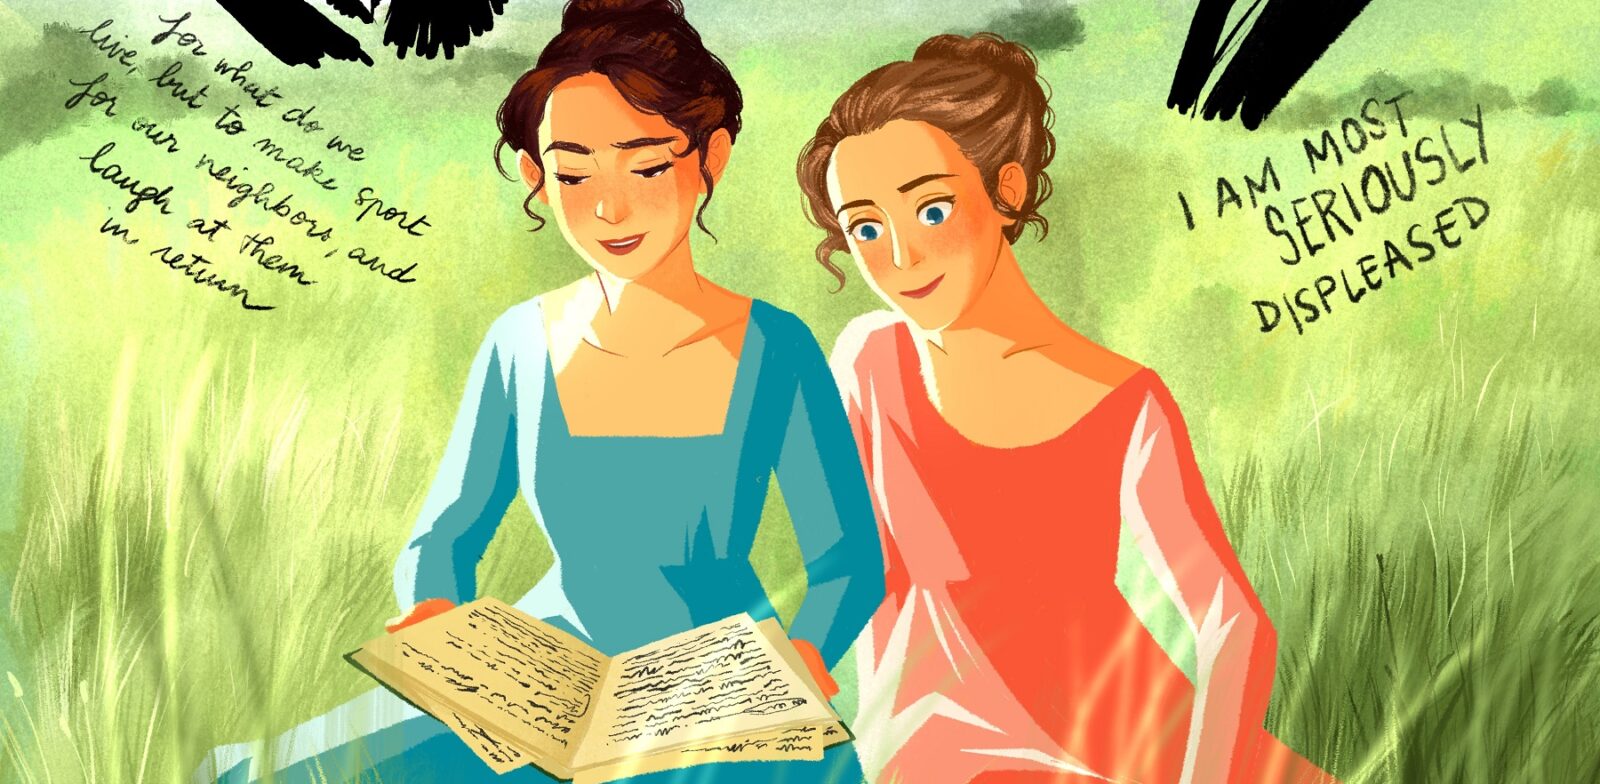 Jane Austen and Cassandra, an illustration by our former Artist in Residence Léna Gibert